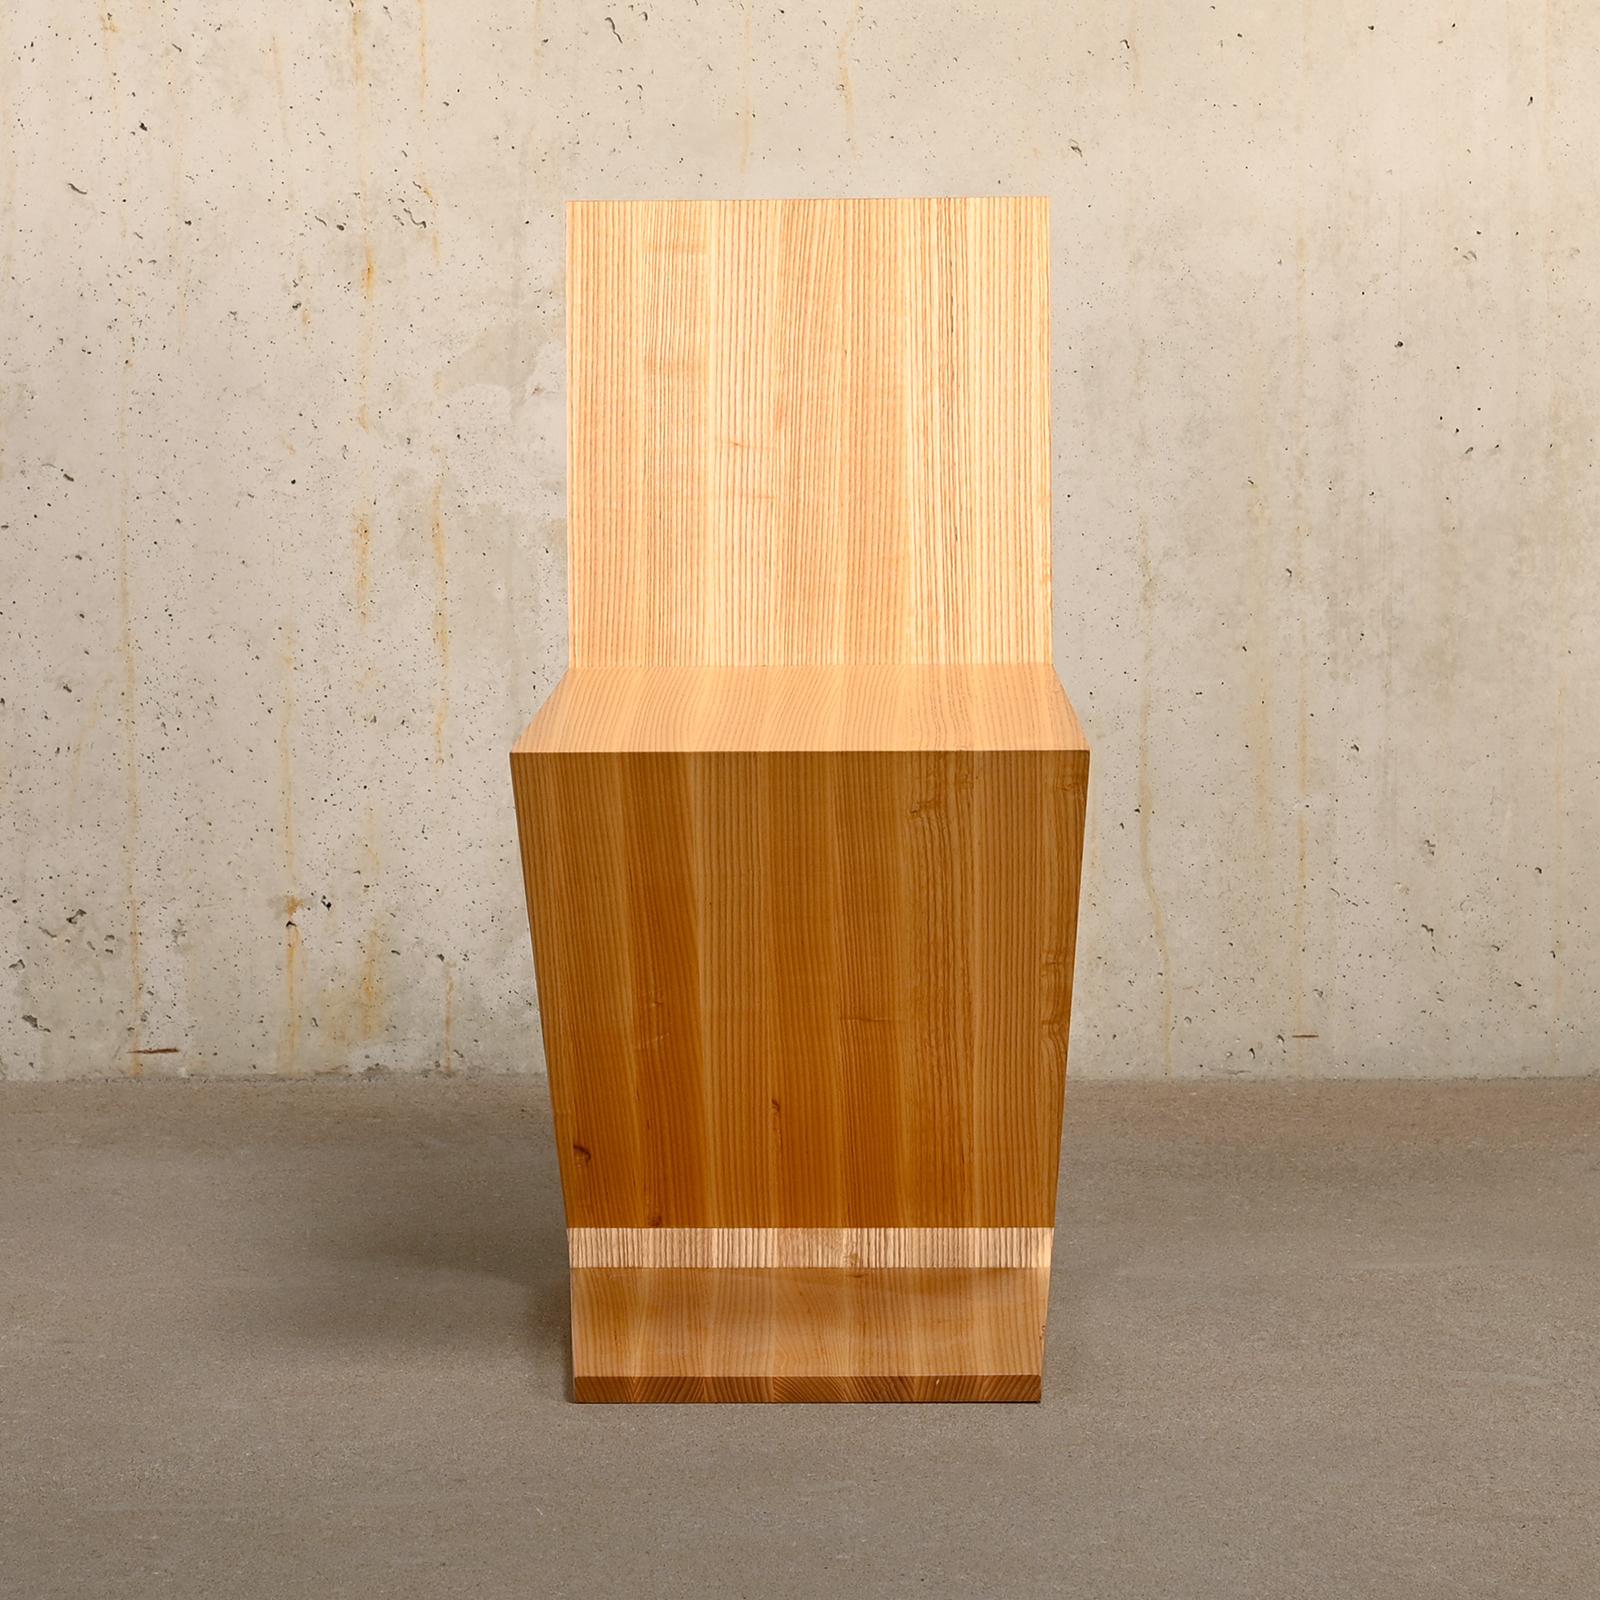 Dutch Gerrit Rietveld Zig Zag Chair is Ash wood